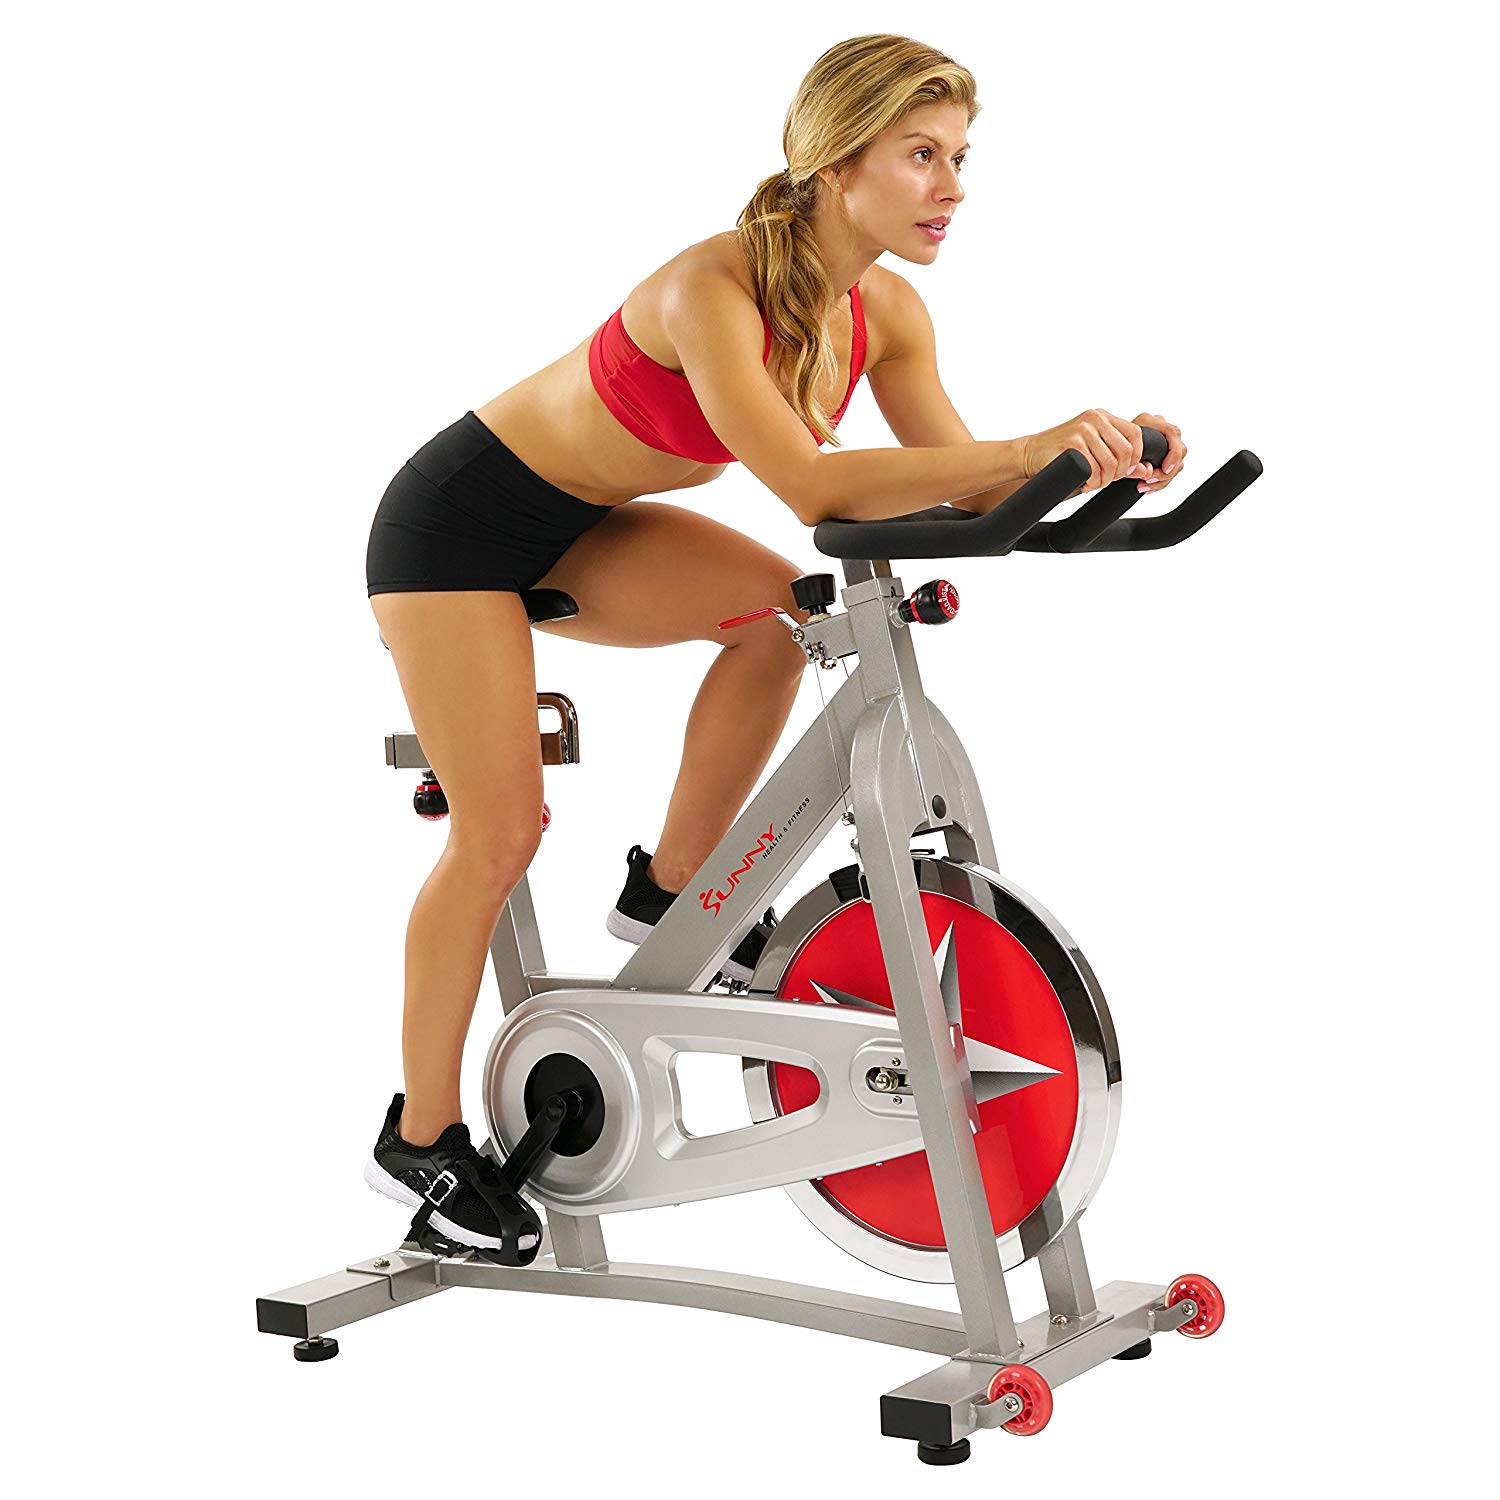 Sunny Health & Fitness Pro Cardio Exercise Bike